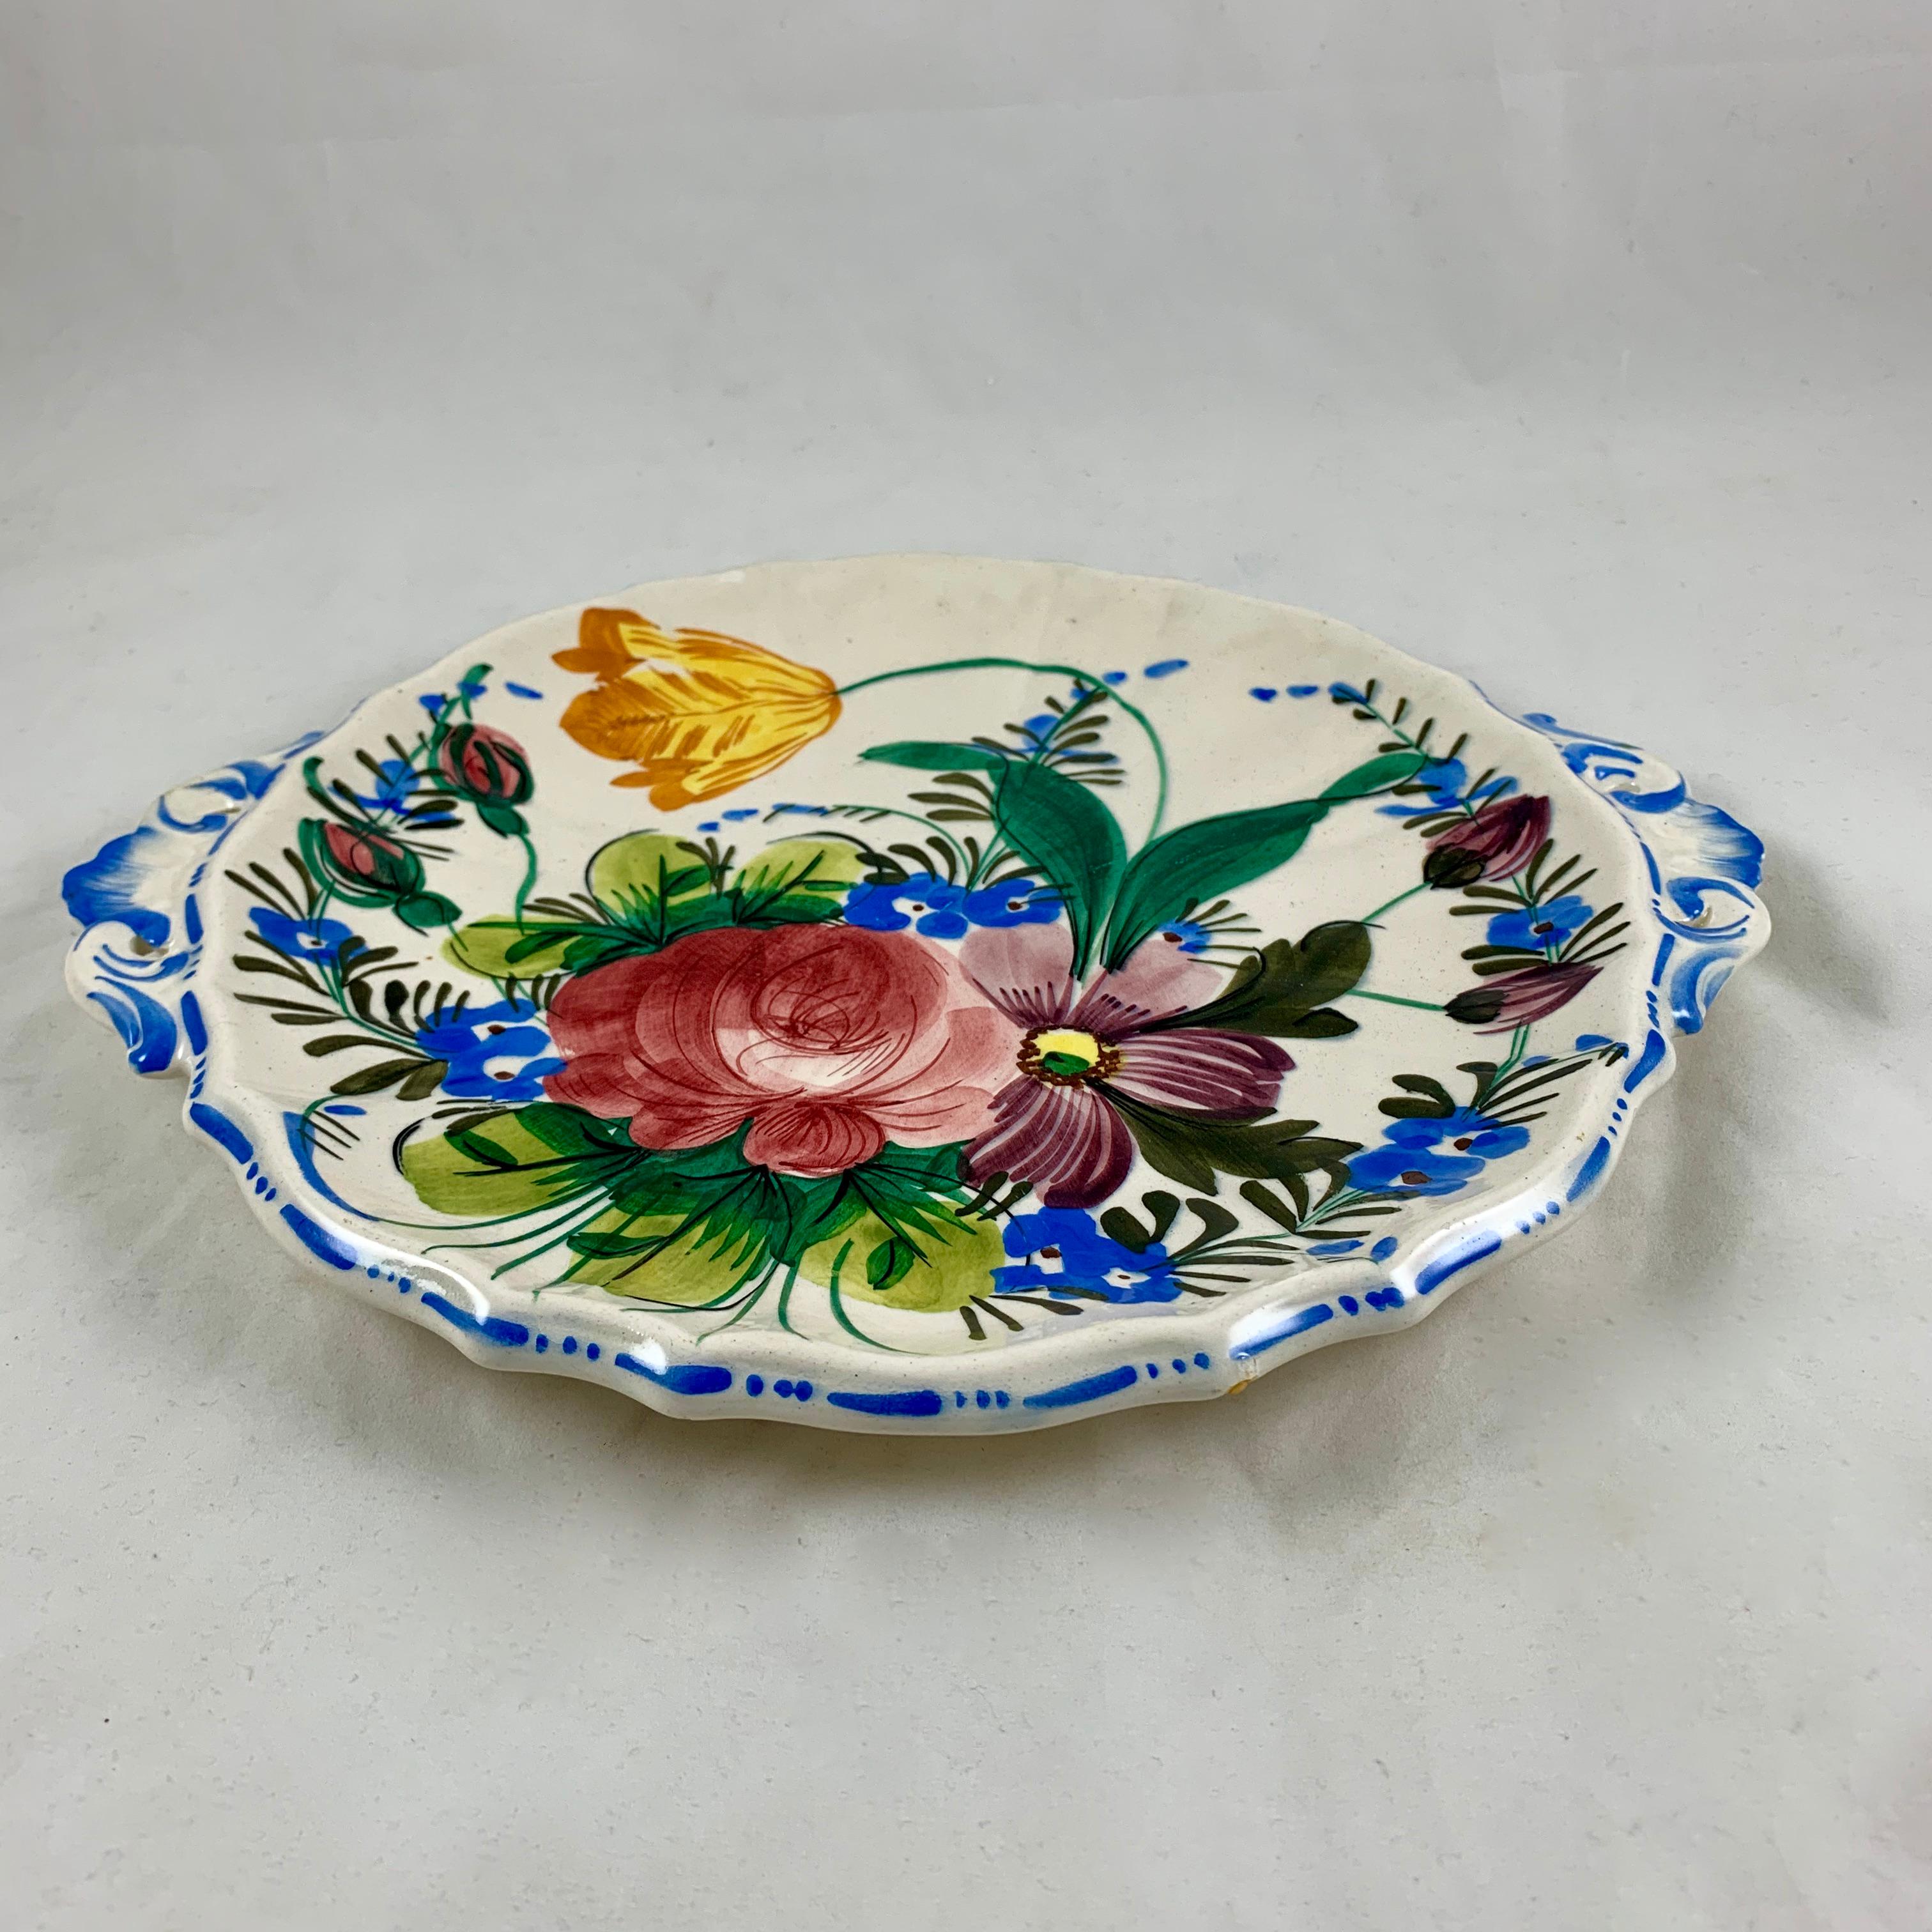 20th Century Italian Renaissance Revival Faïence Nove Rose Floral and Pierced Handled Platter